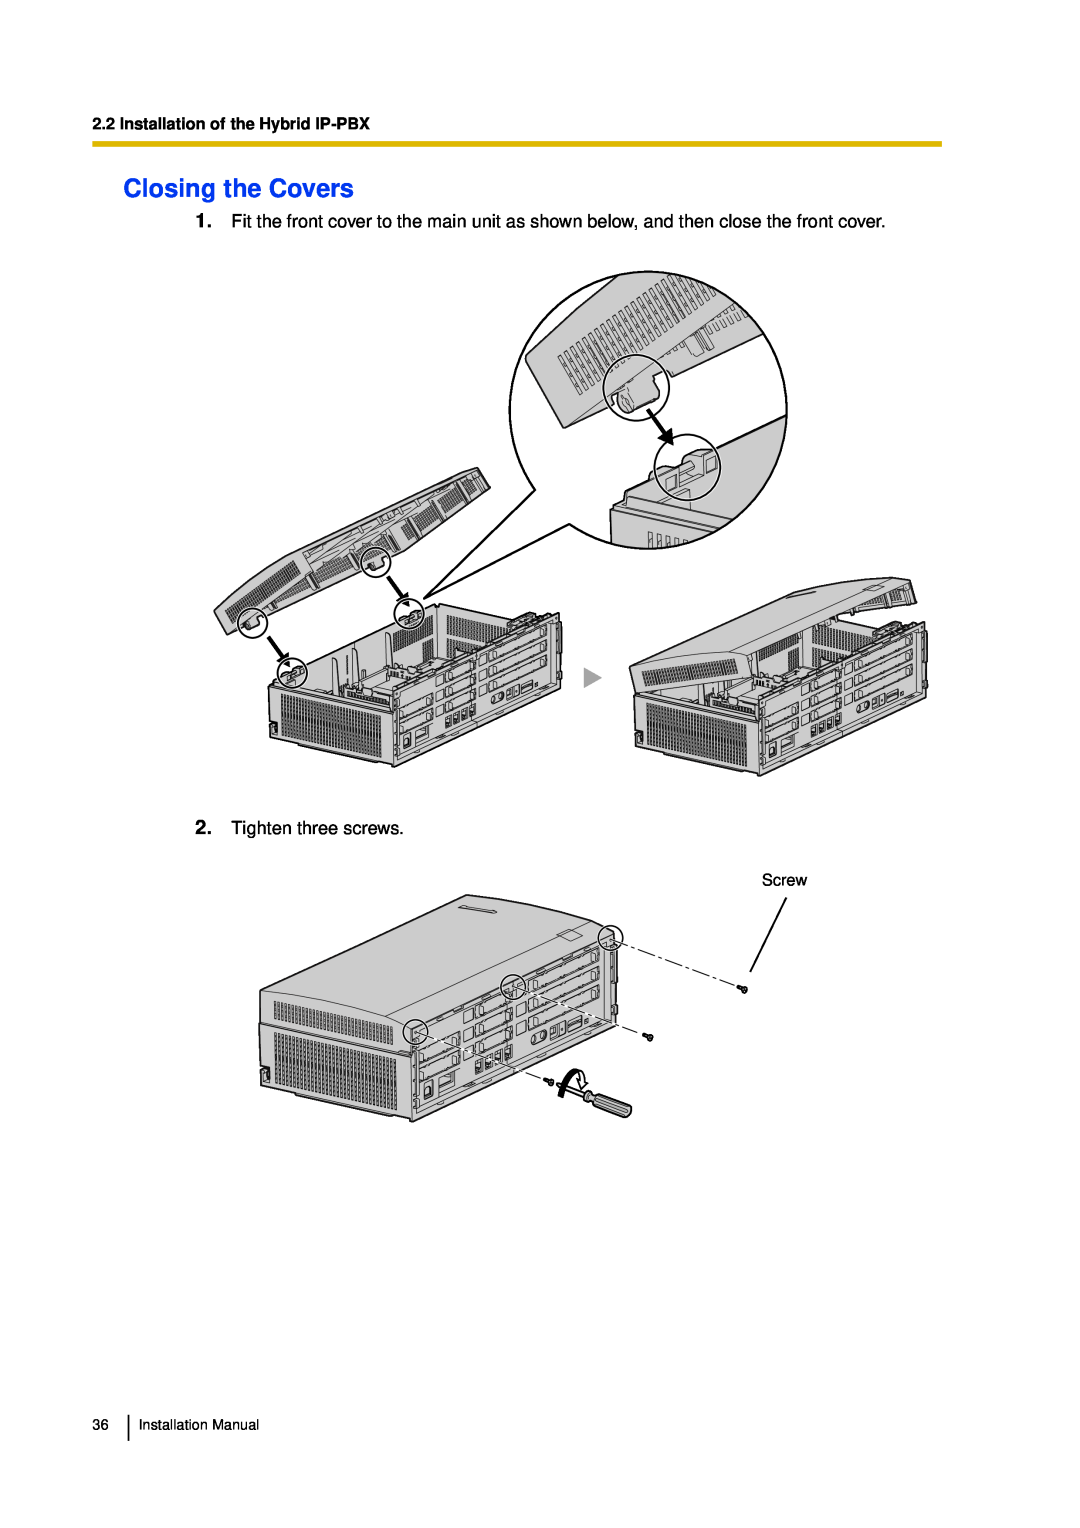 Panasonic KX-TDA30 installation manual Closing the Covers, Tighten three screws, Installation of the Hybrid IP-PBX 